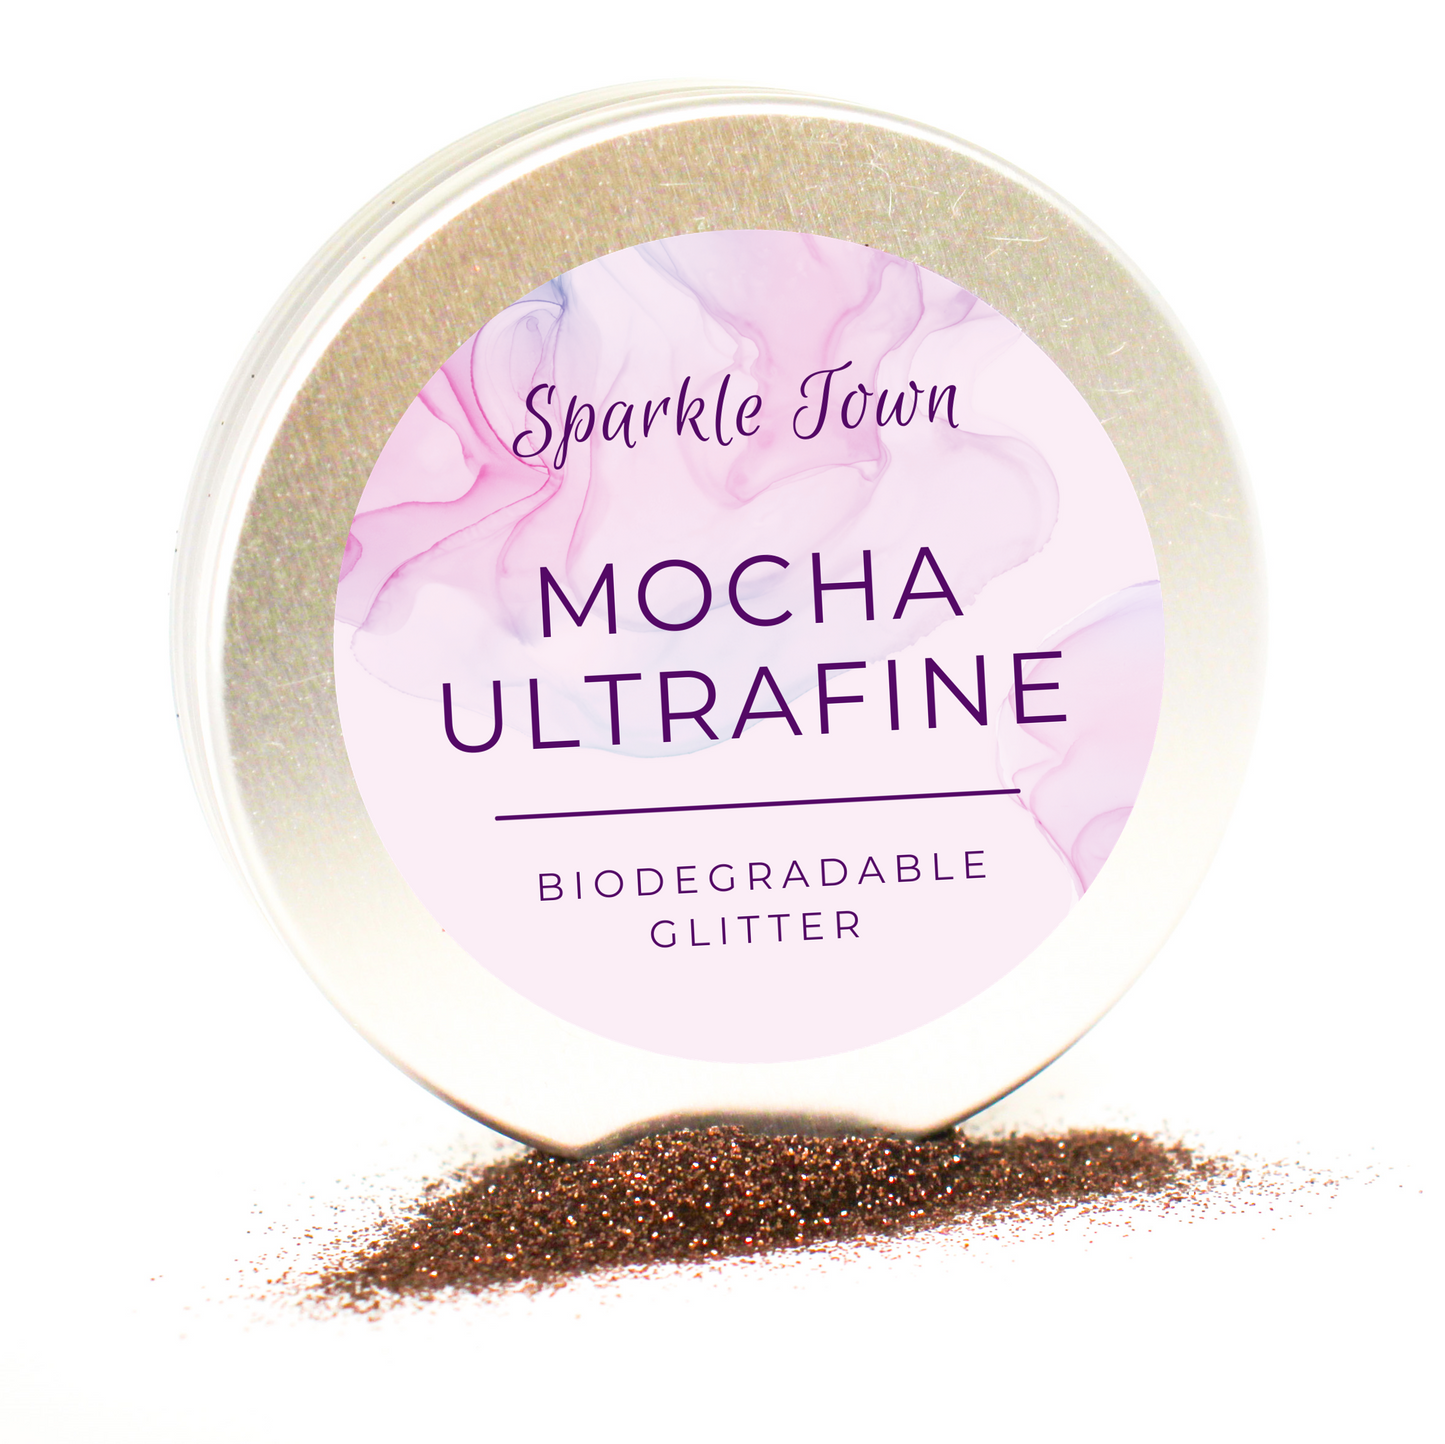 Mocha Ultrafine Biodegradable Glitter